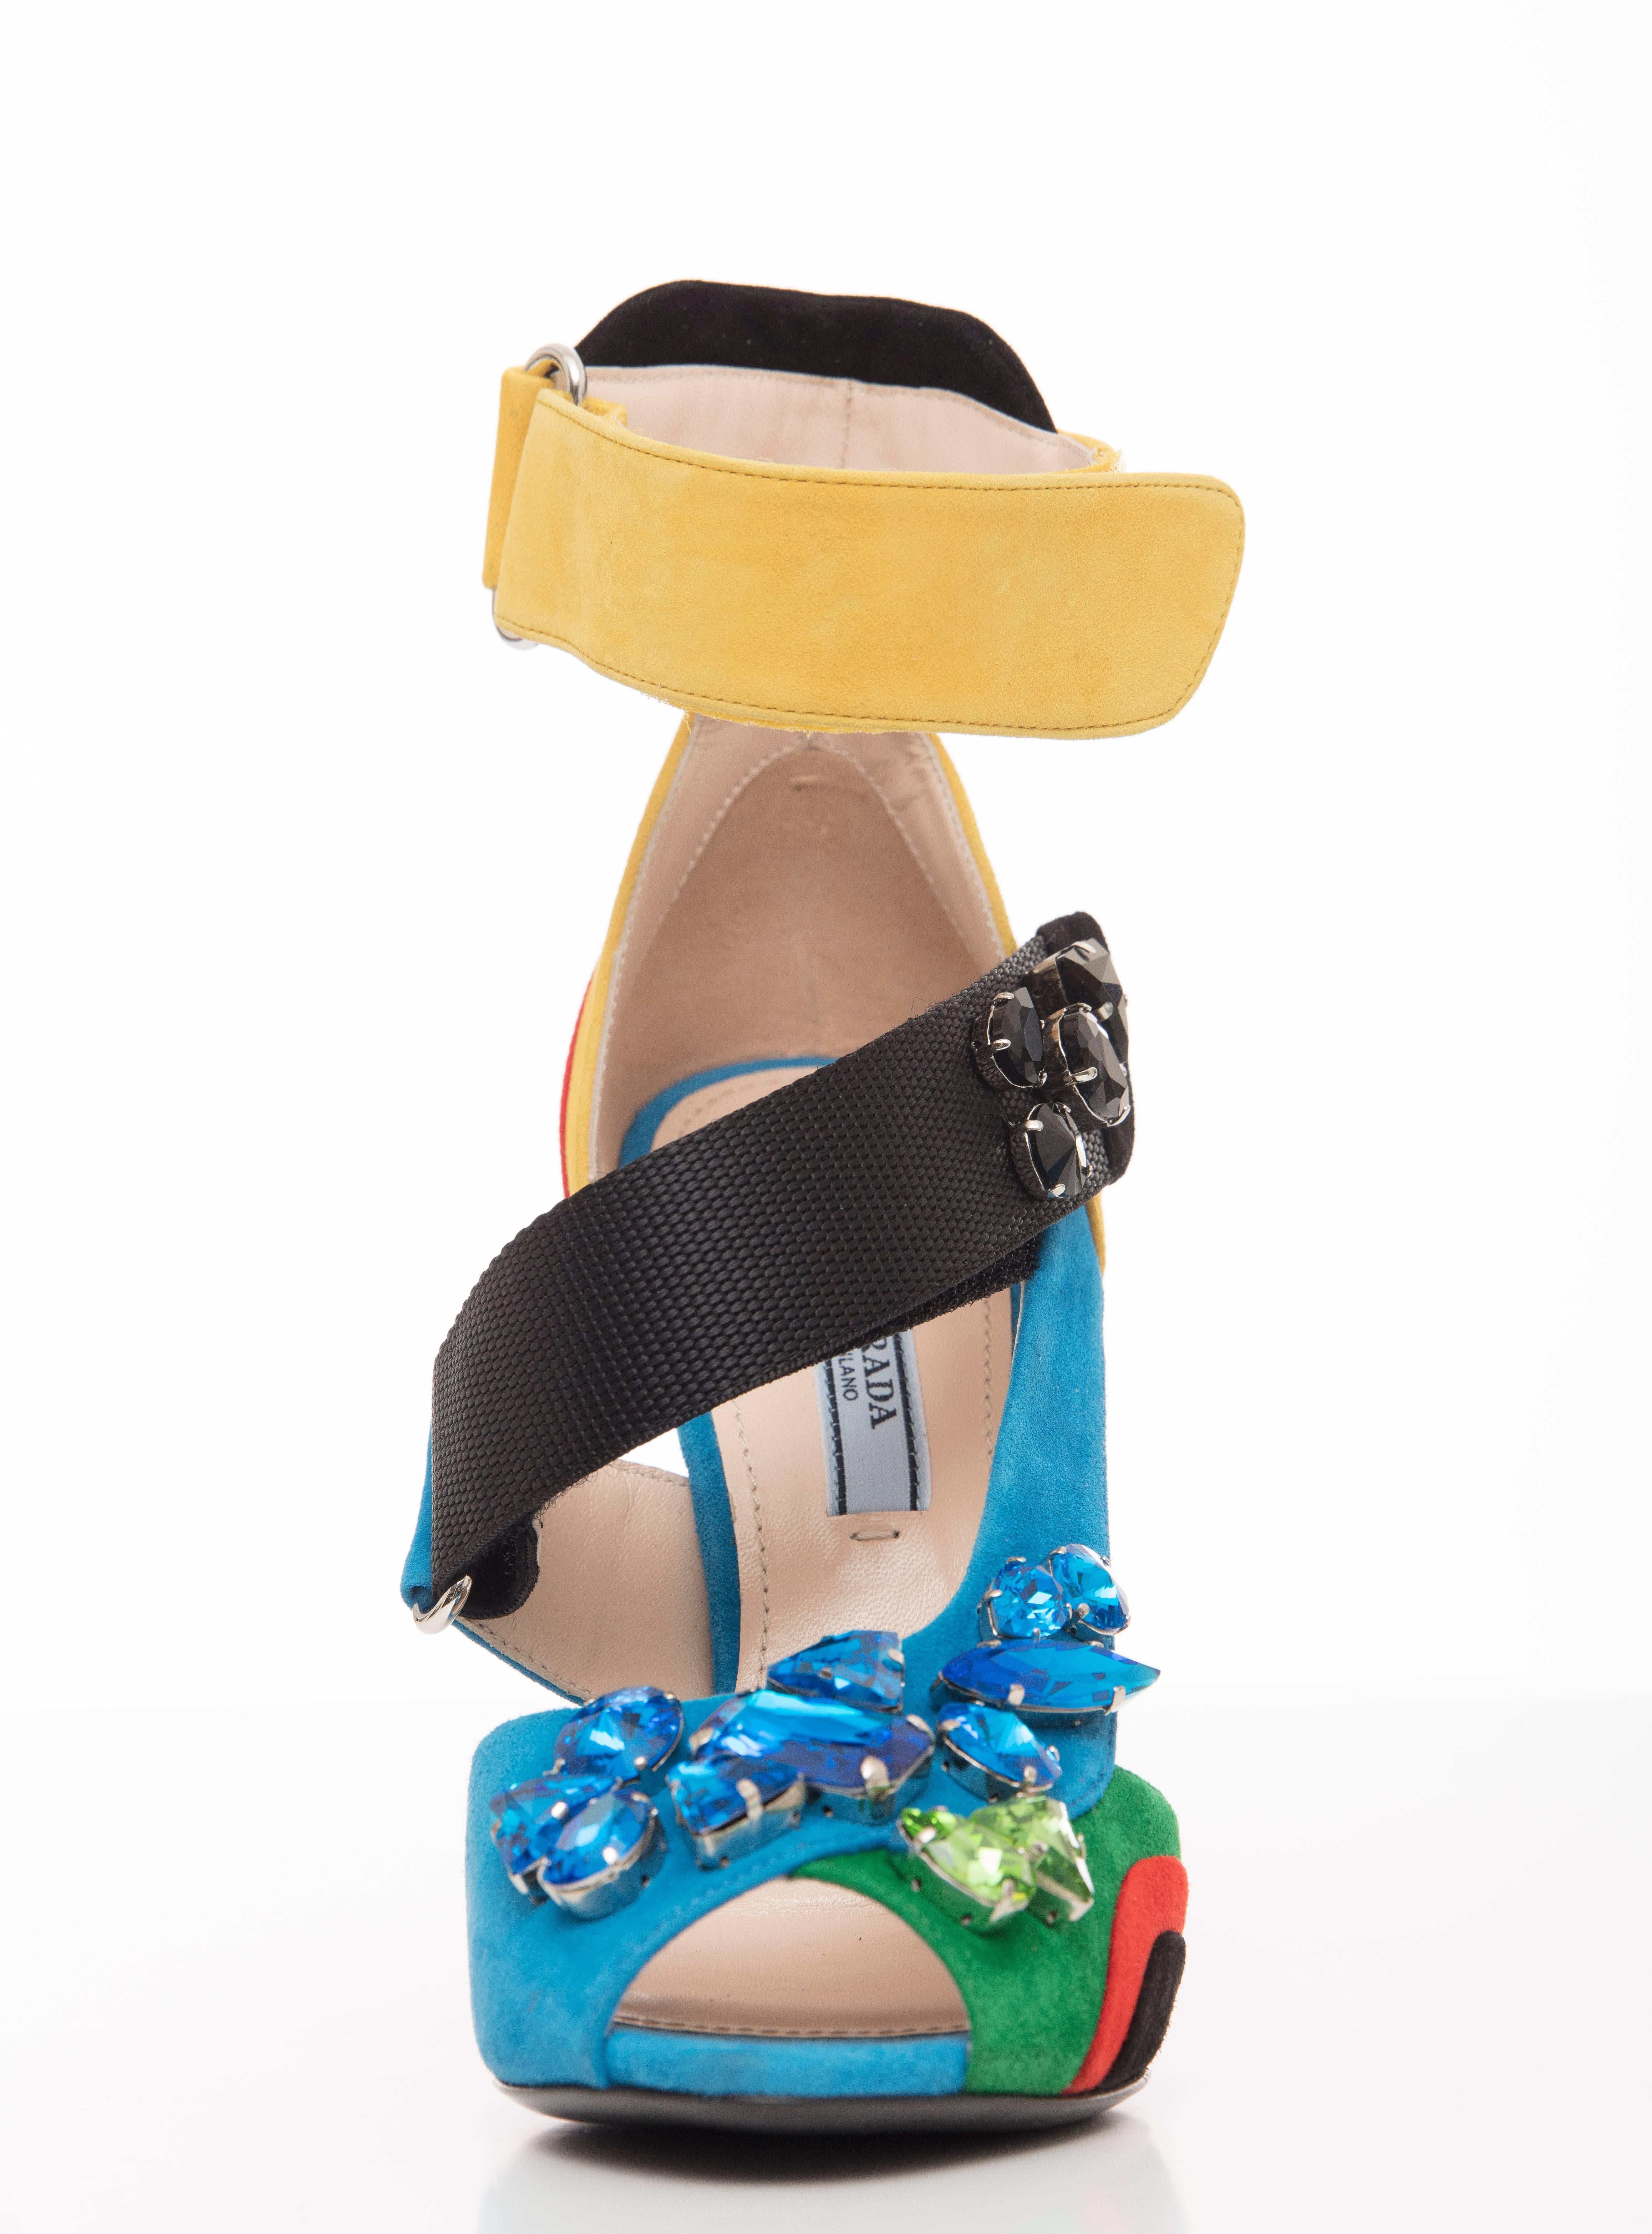 Blue Prada Suede Sandals With Jewel Embellishments, Spring 2014